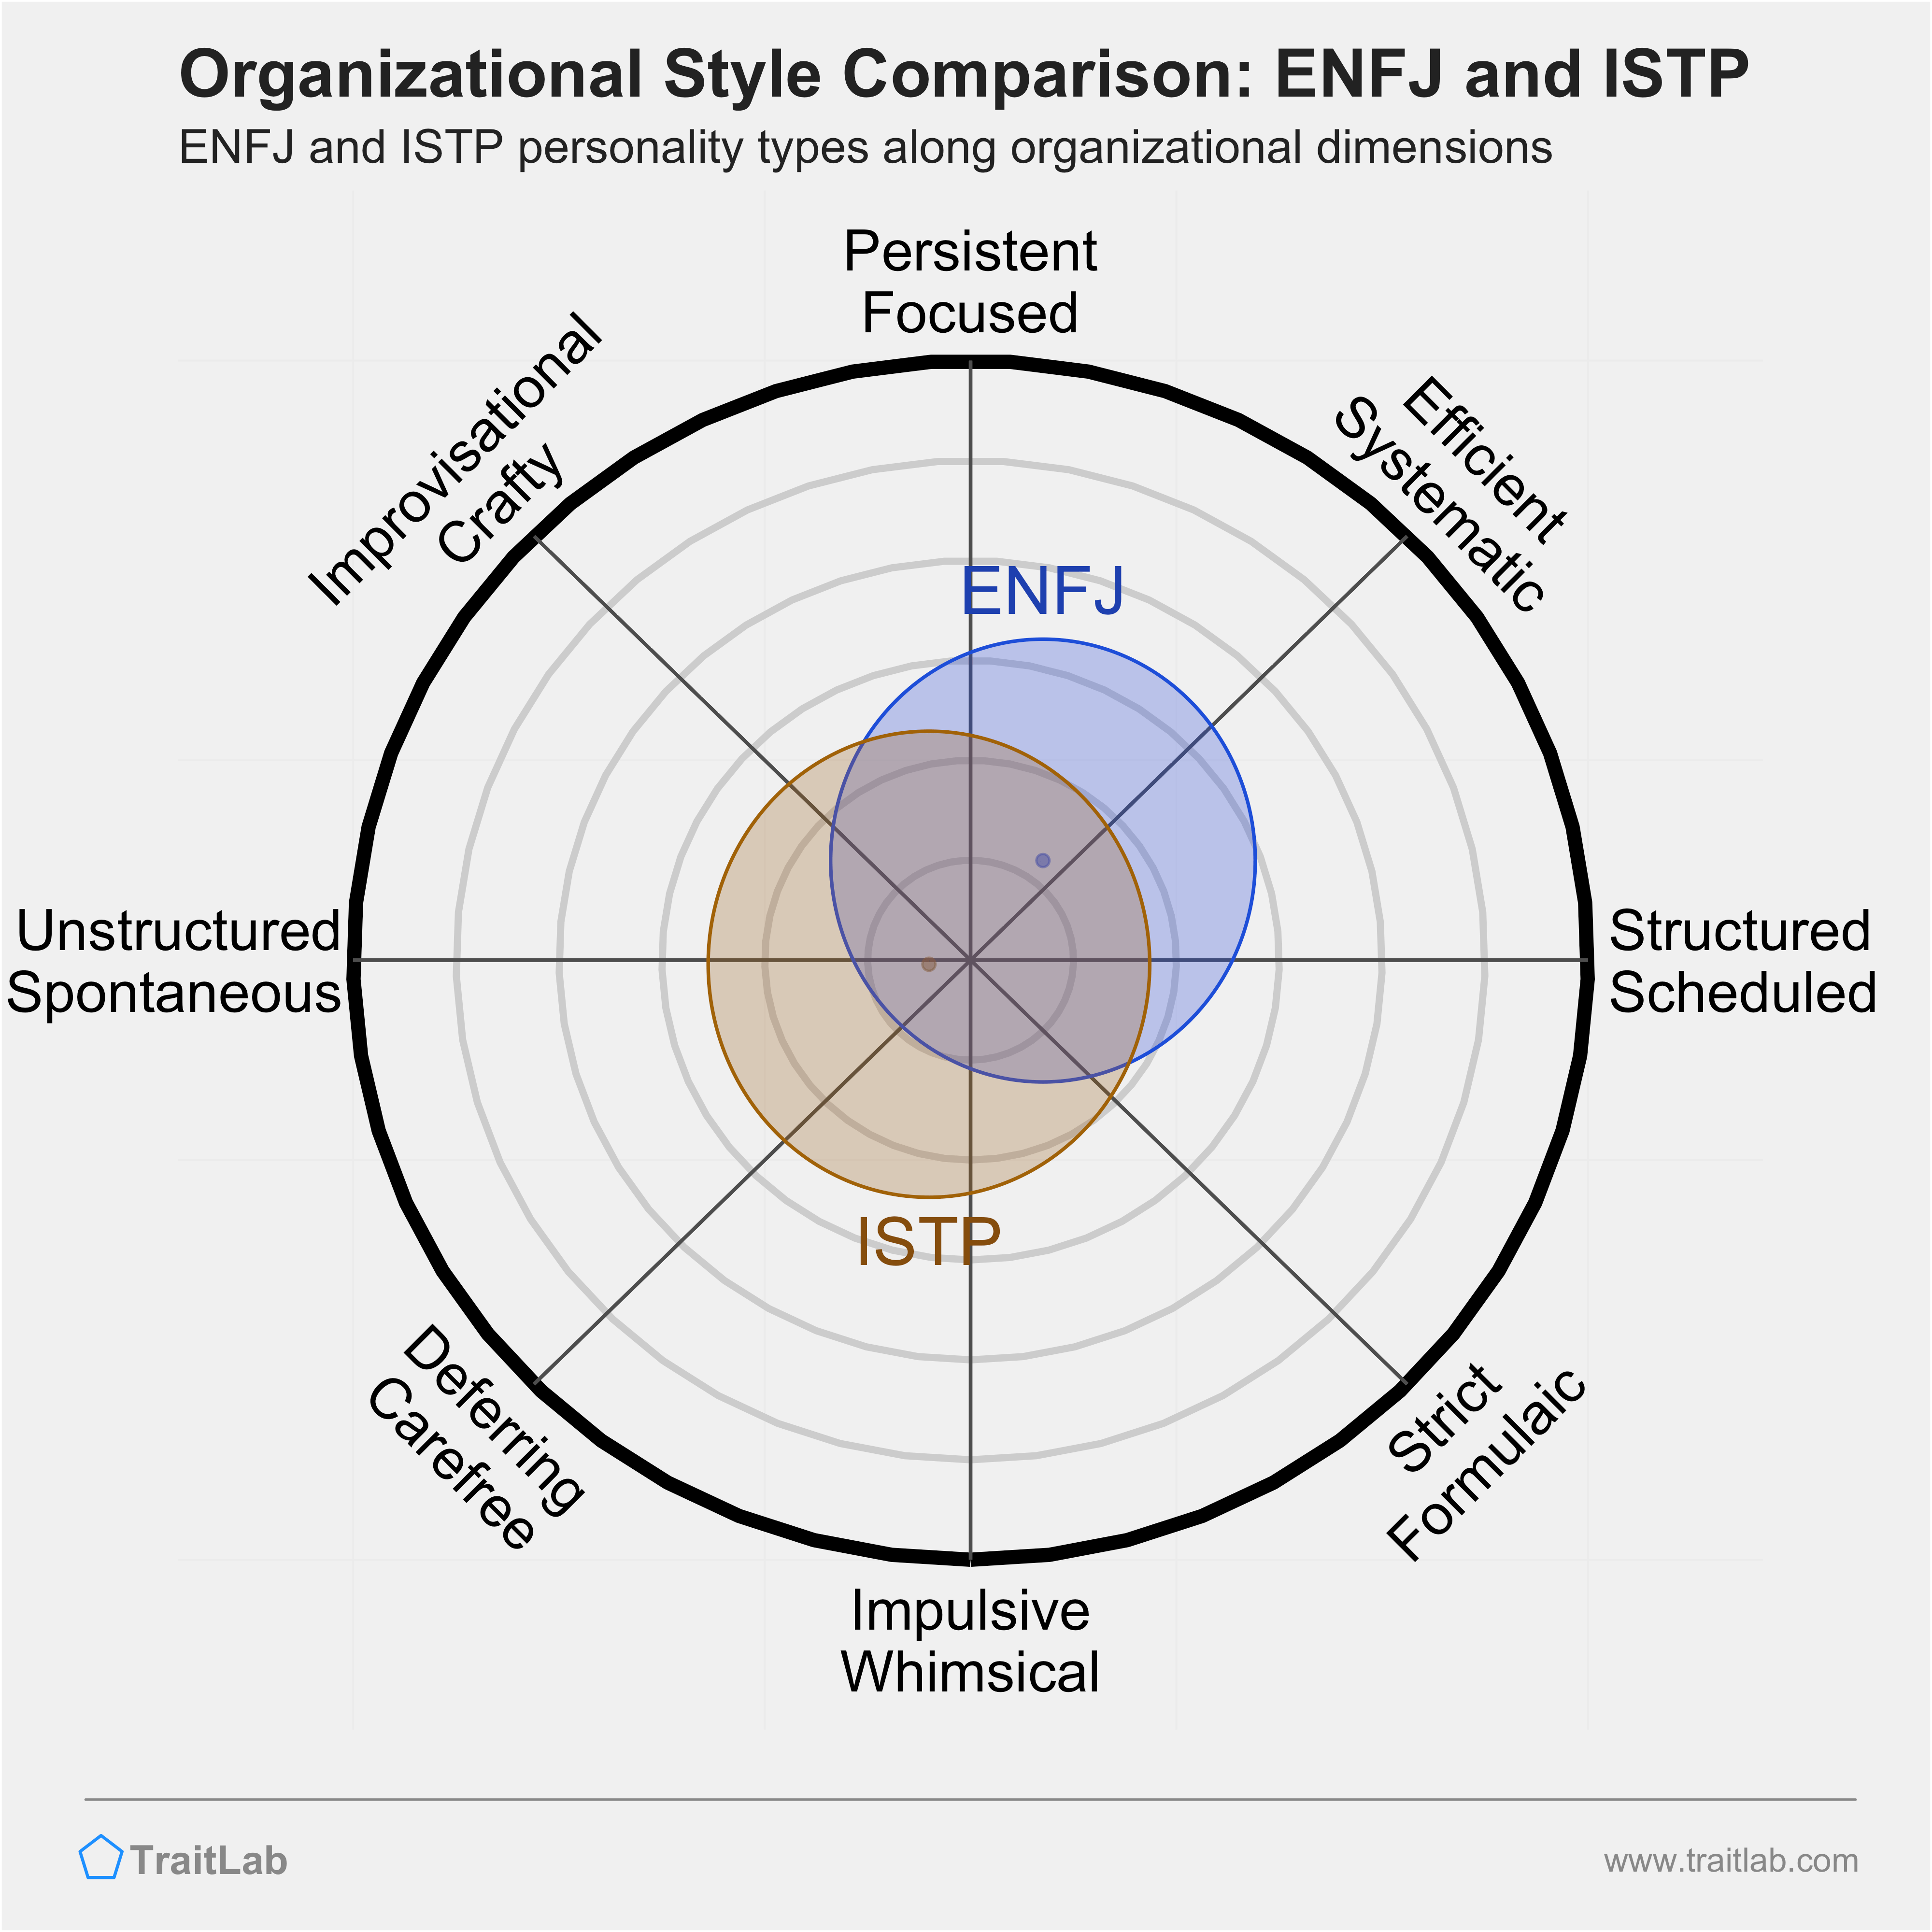 ENFJ and ISTP comparison across organizational dimensions